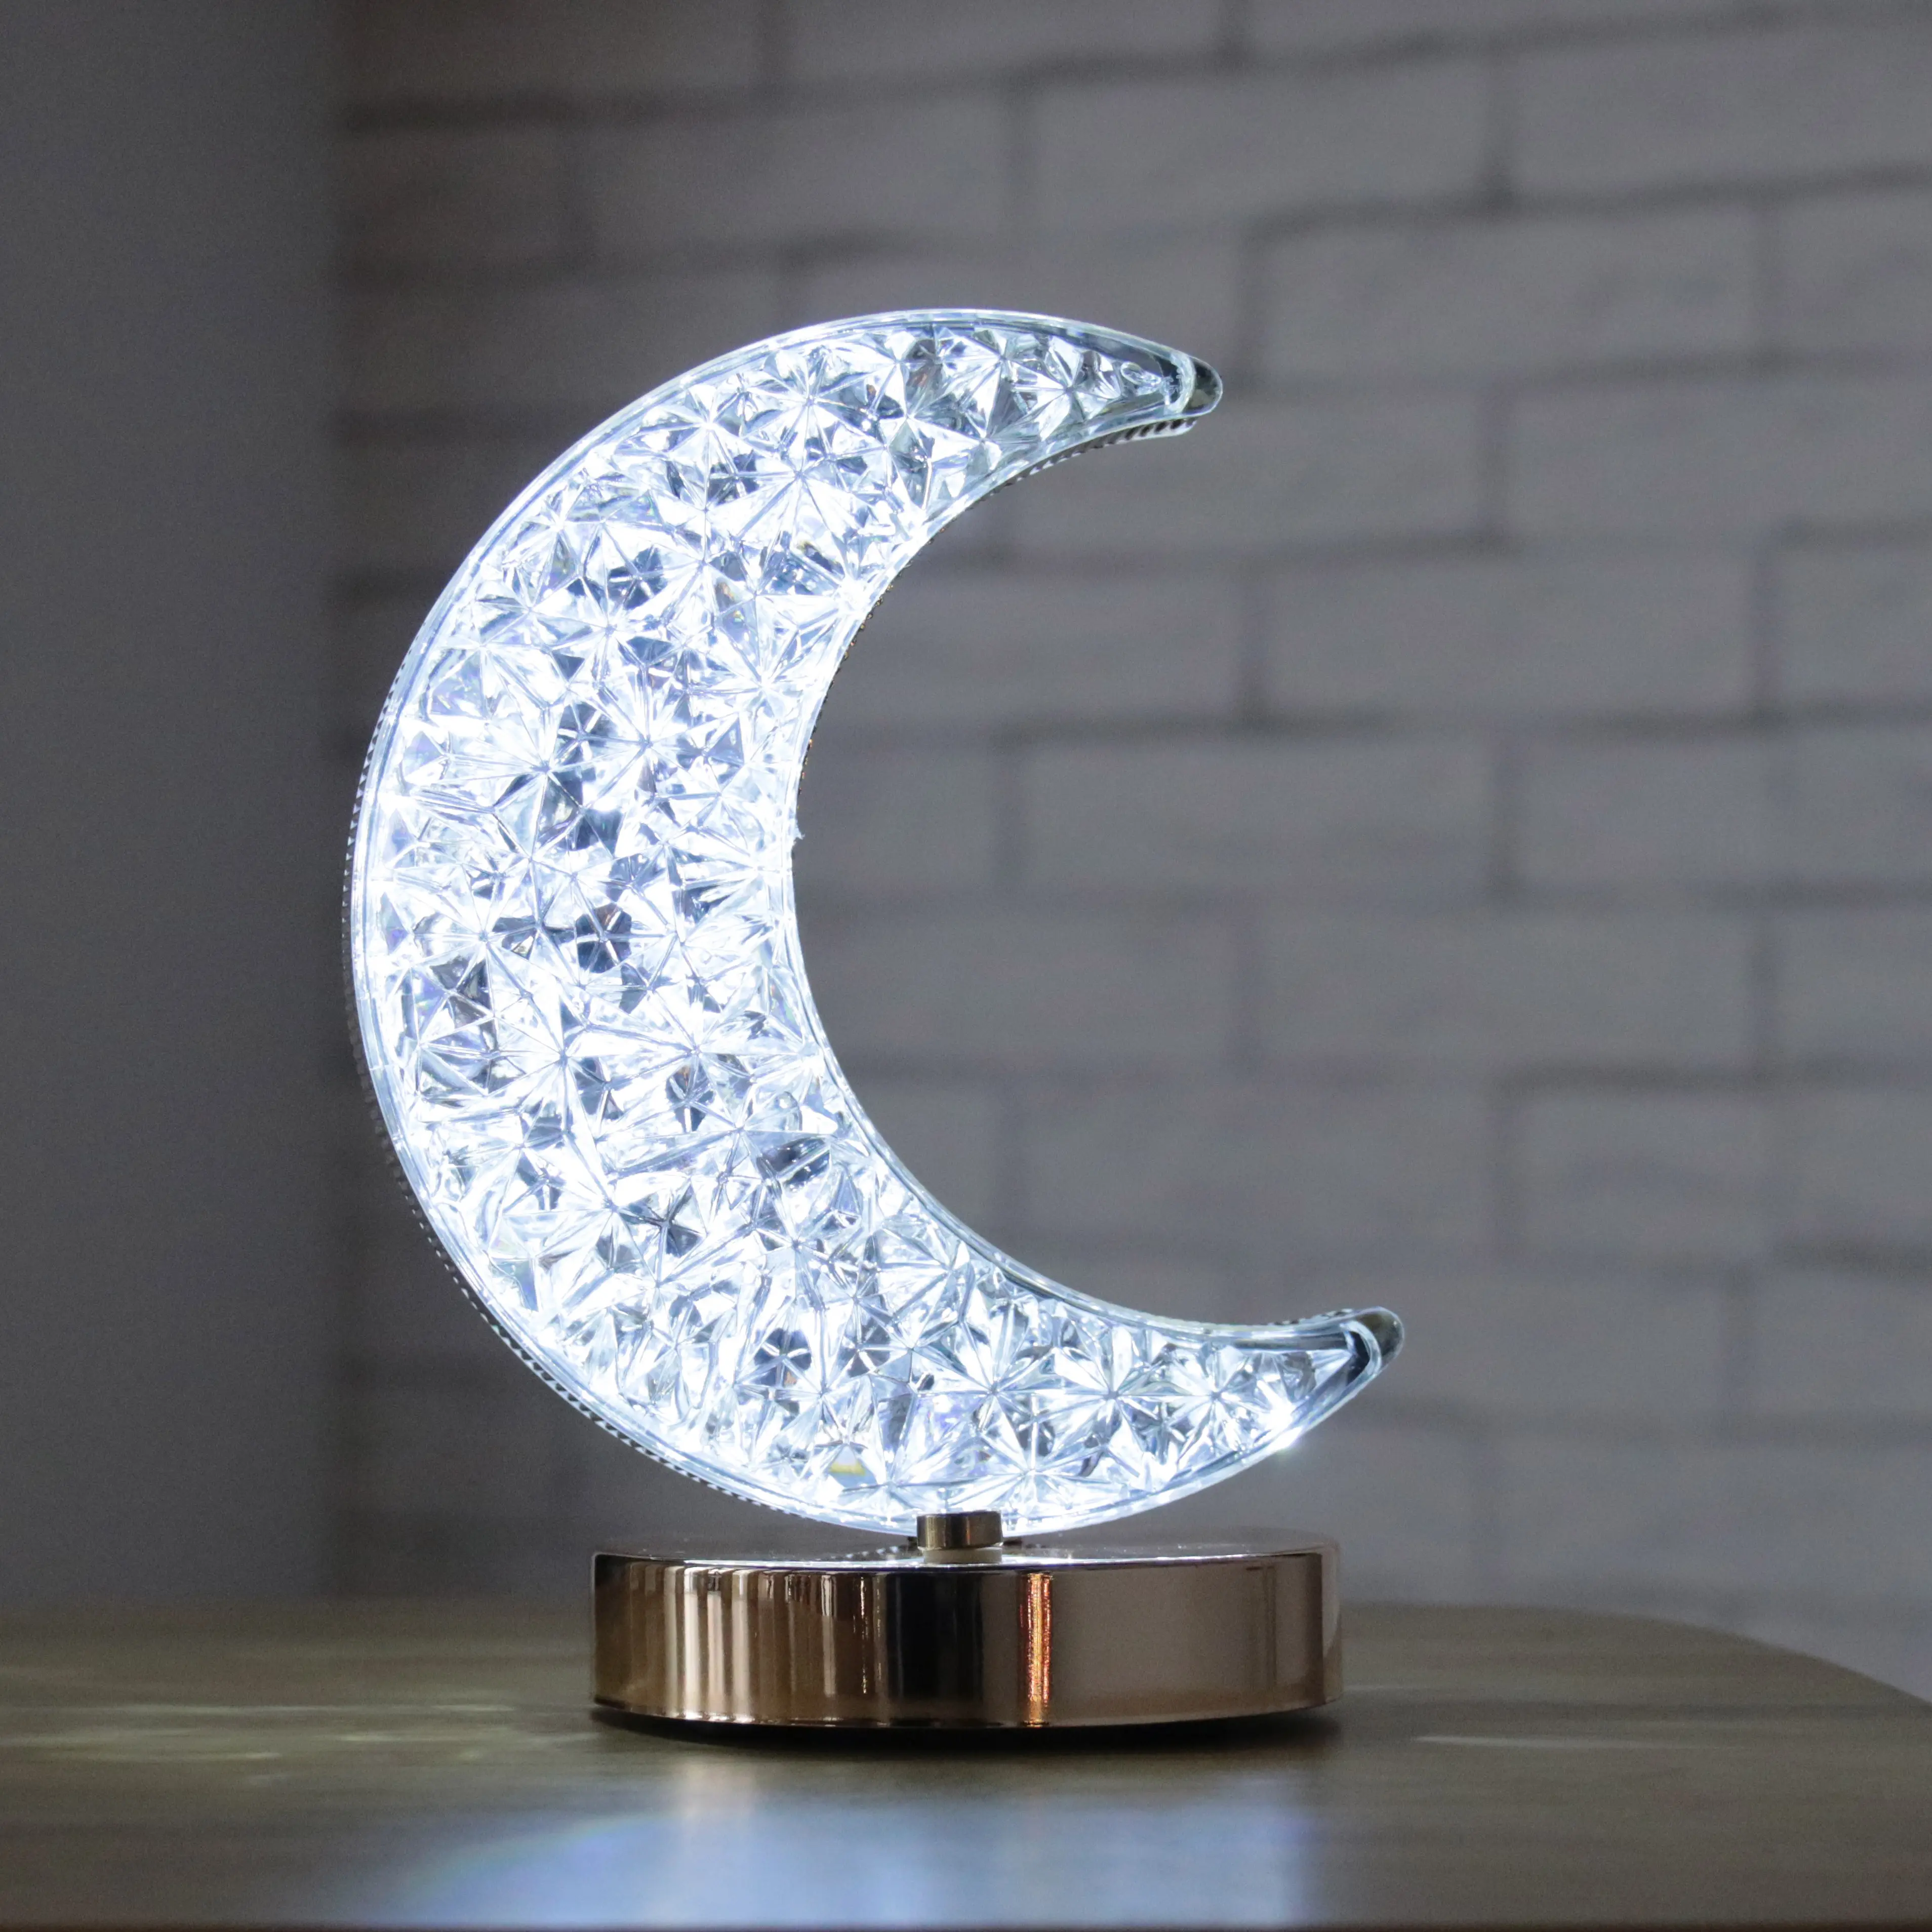 Lampu meja sentuh kristal LED Nordik, lampu malam samping tempat tidur kreatif akrilik untuk kamar tidur dan restoran